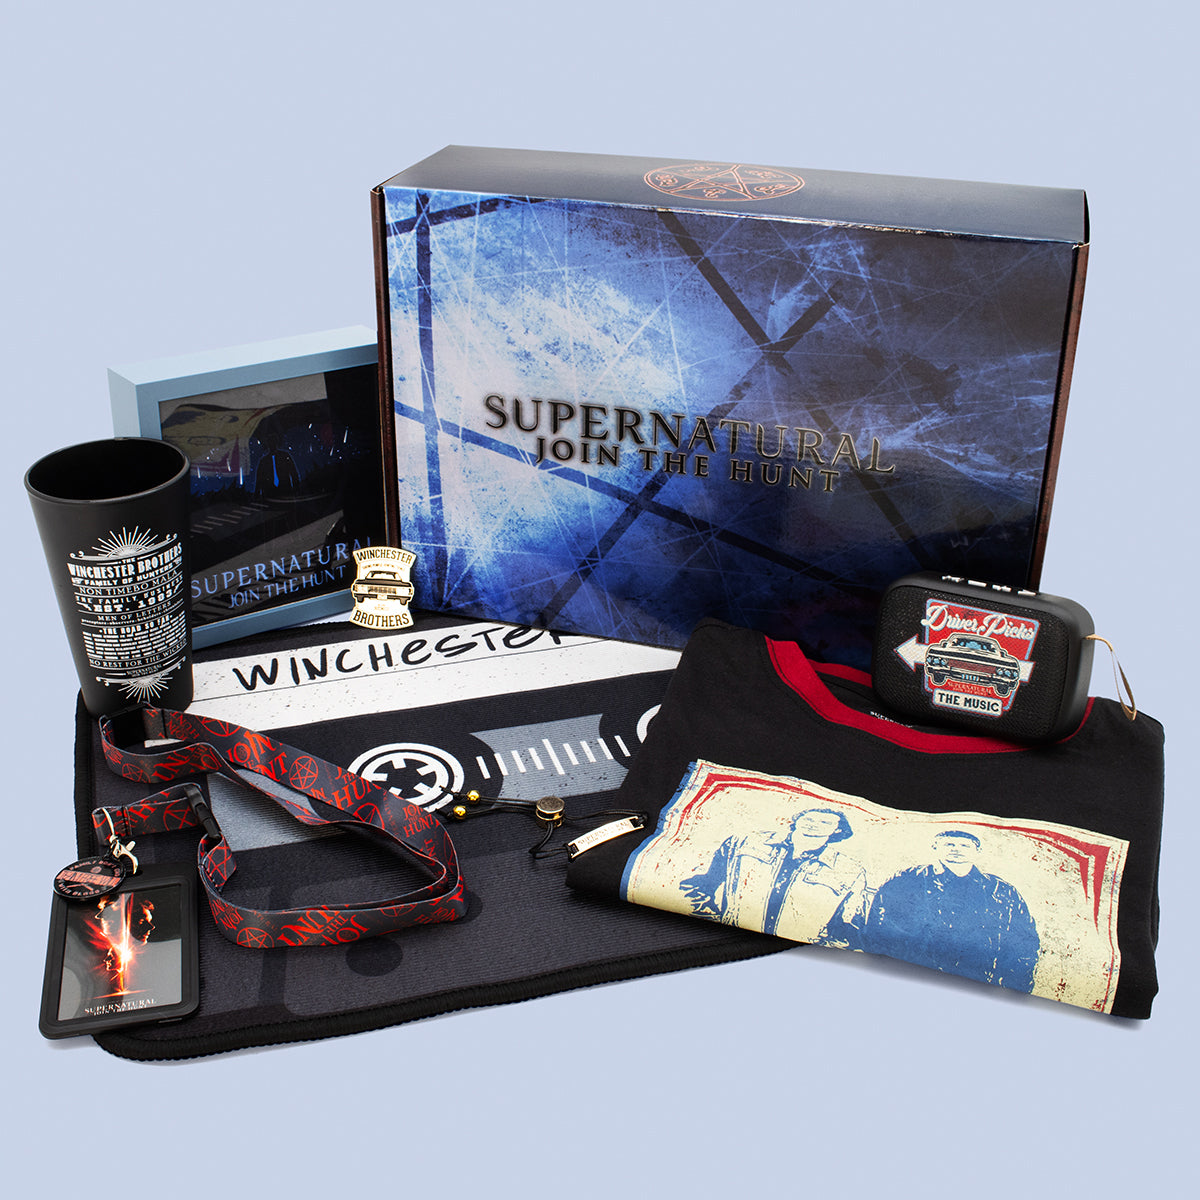 Supernatural Merchandising Gifts & Merchandise for Sale